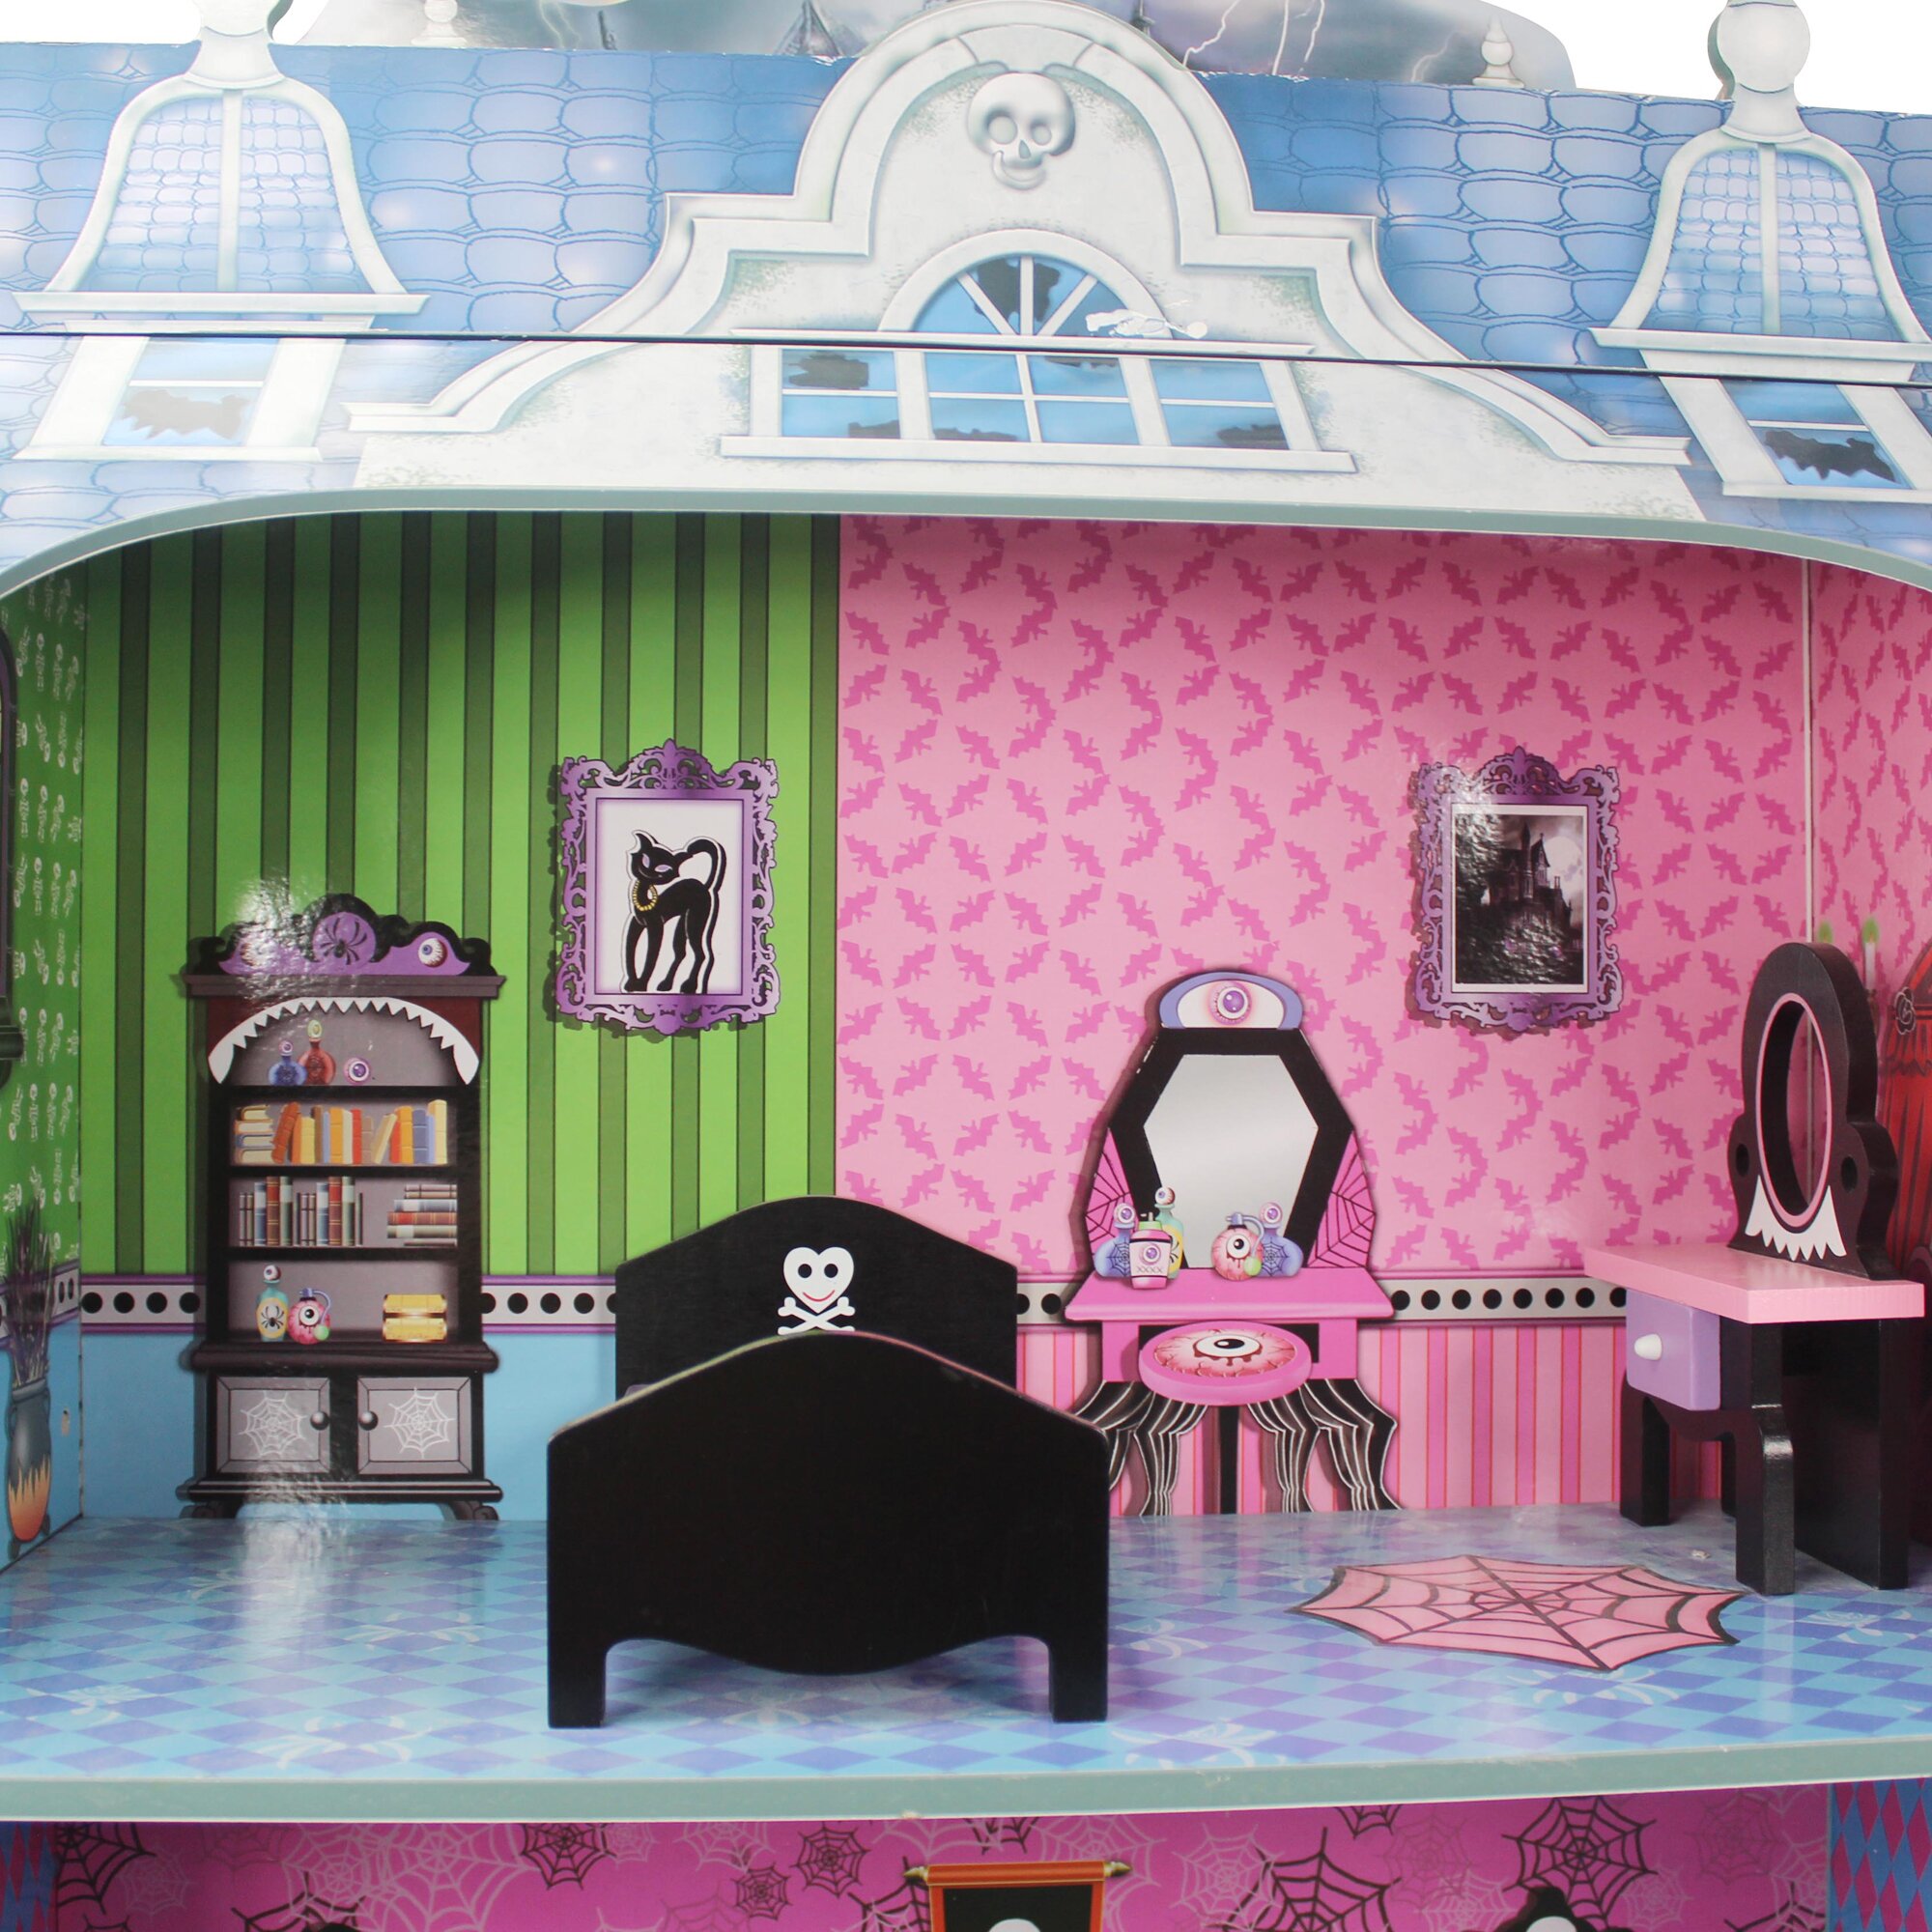 Teamson Kids Monster Mansion Doll House & Reviews | Wayfair